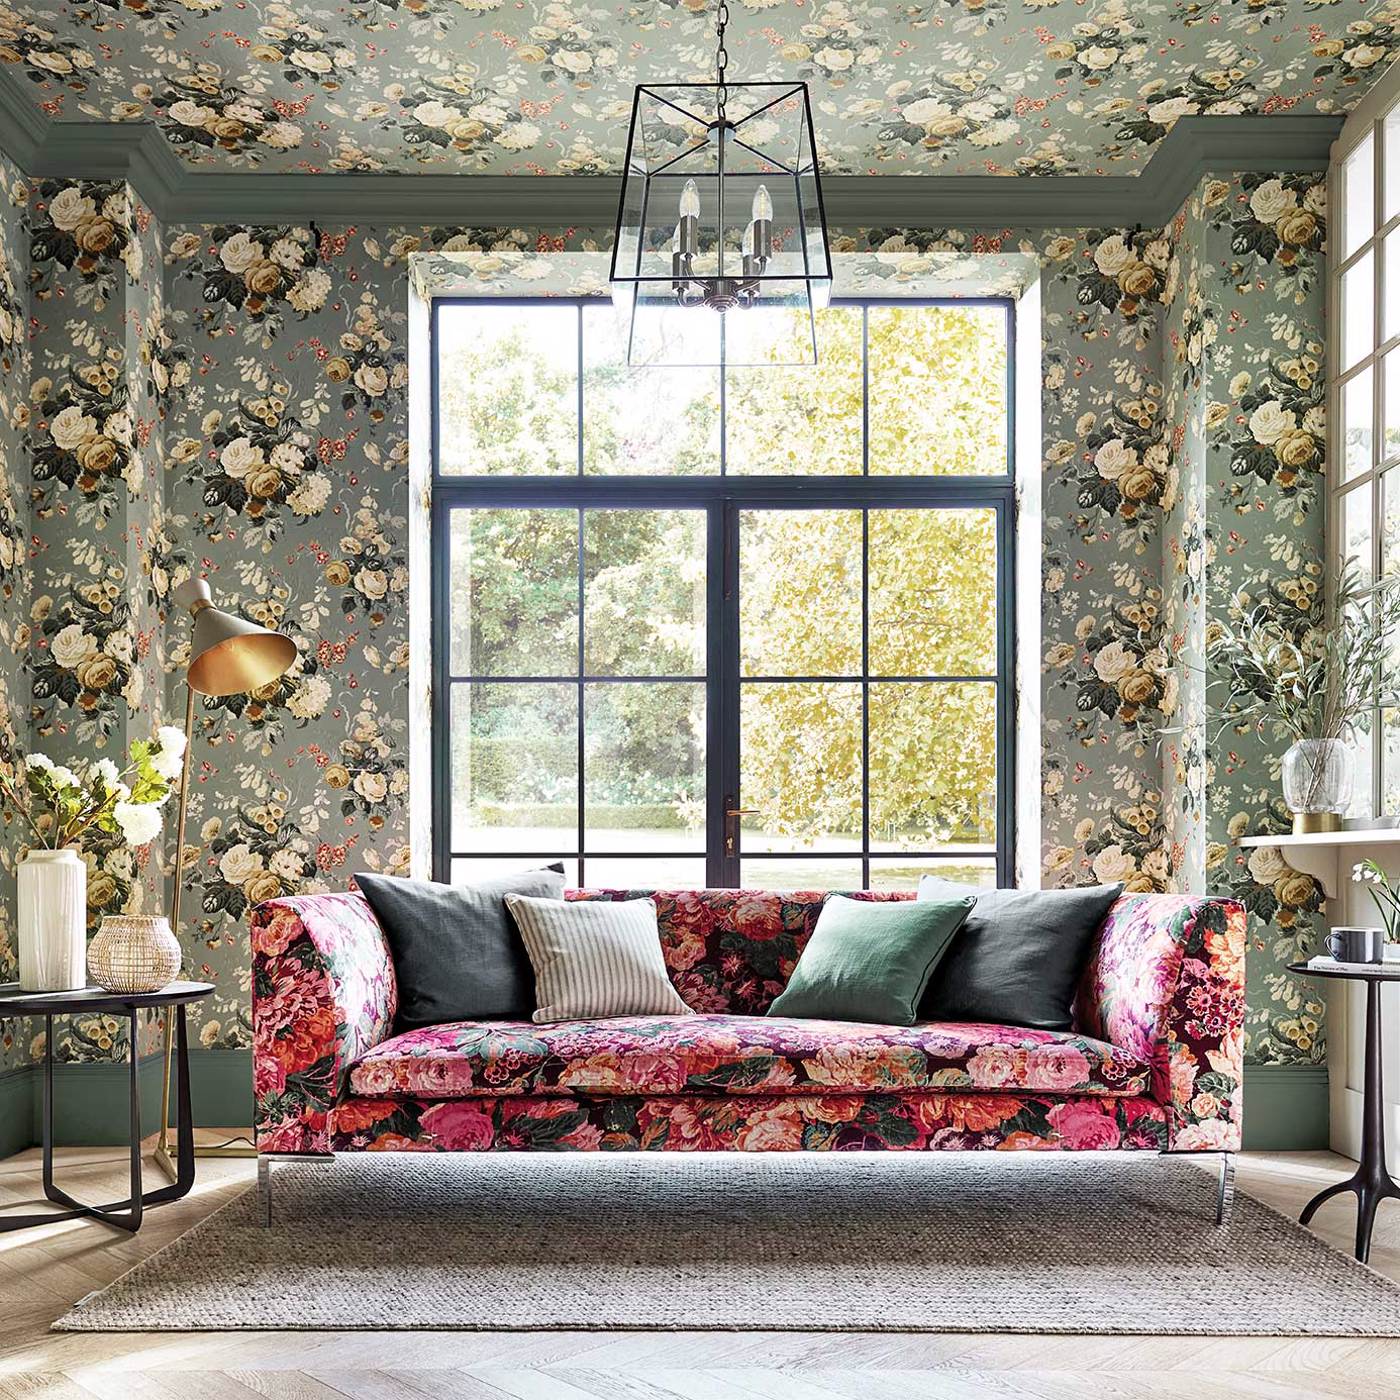 Very Rose and Peony Kingfisher/Rowan Berry Fabric by SAN